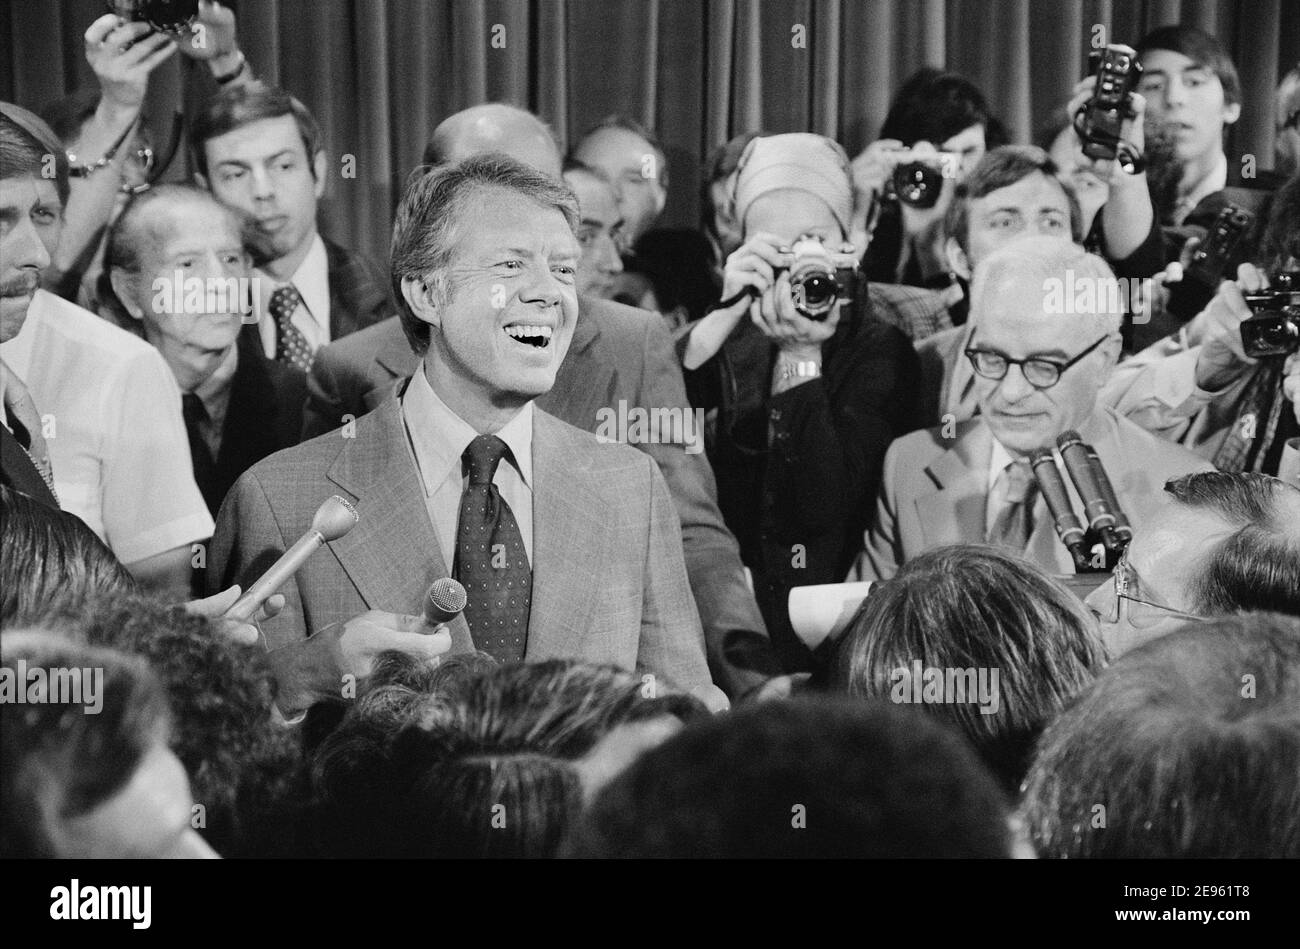 U.S. President Jimmy Carter at Press Conference, surrounded by Journalists, Washington, D.C., USA, Thomas J. O'Halloran, June 13, 1977 Stock Photo